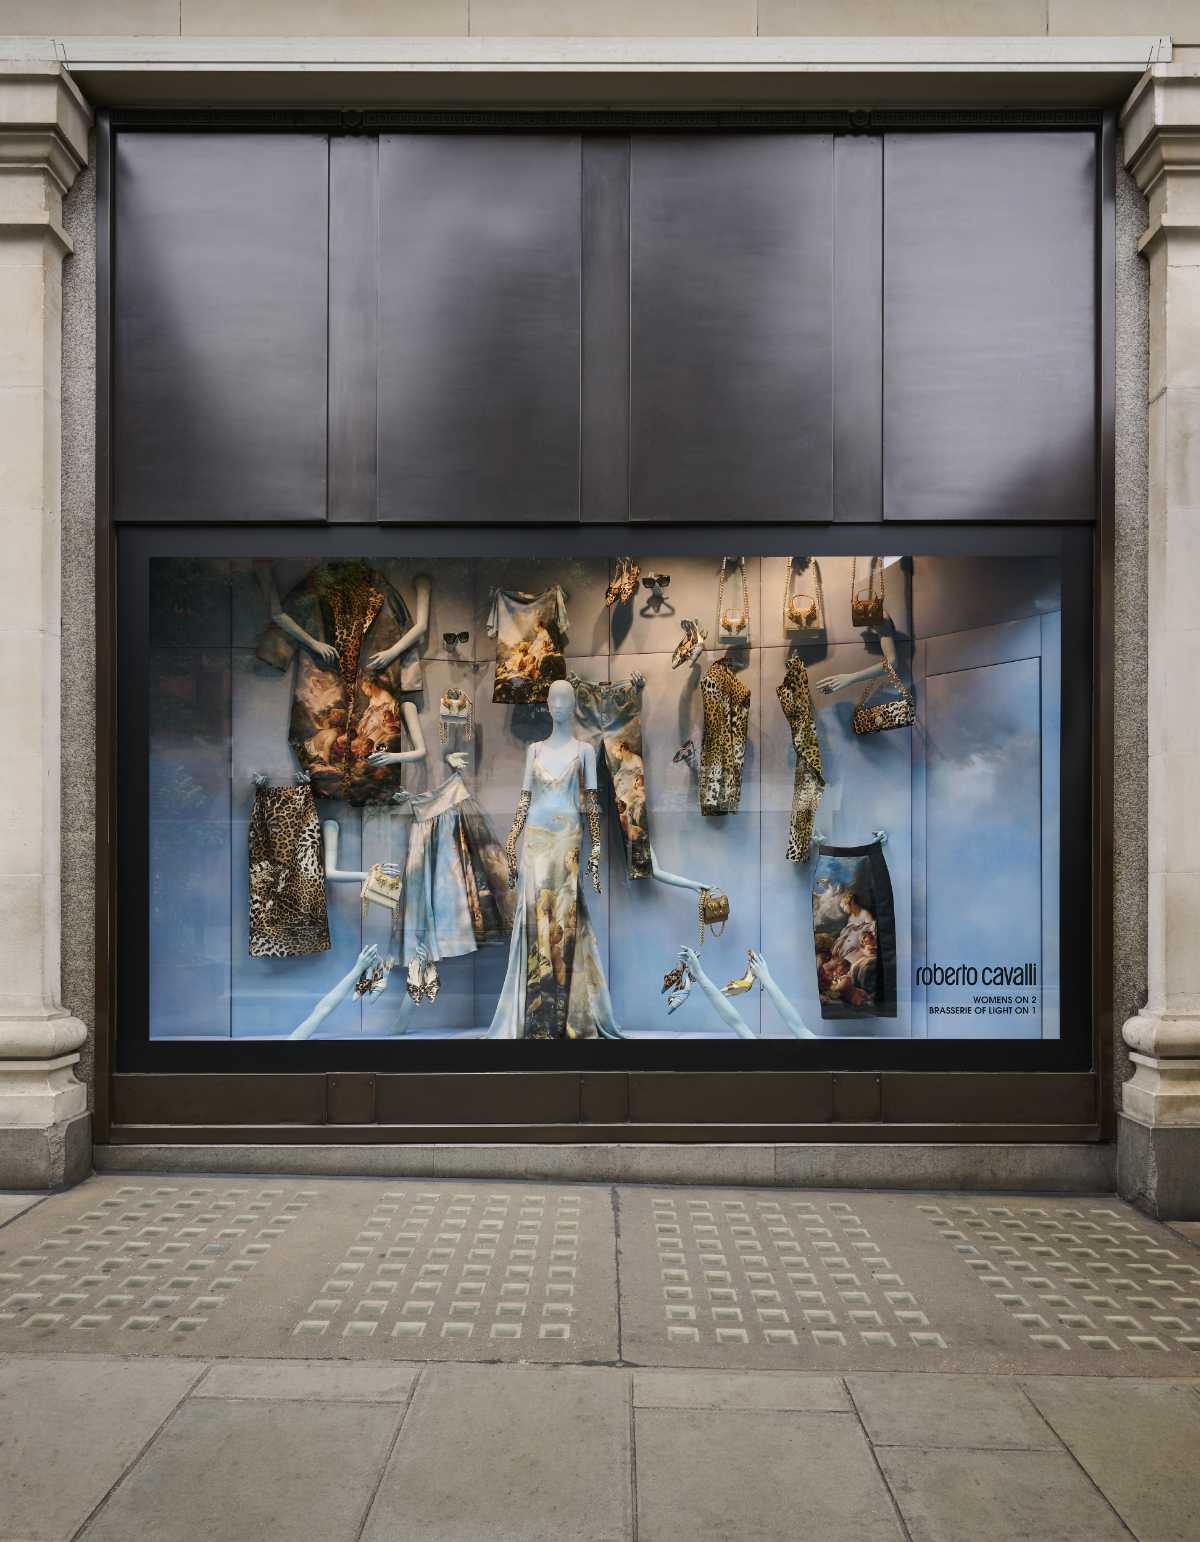 Roberto Cavalli Celebrates The Wild Leda Collection With Selfridges In London